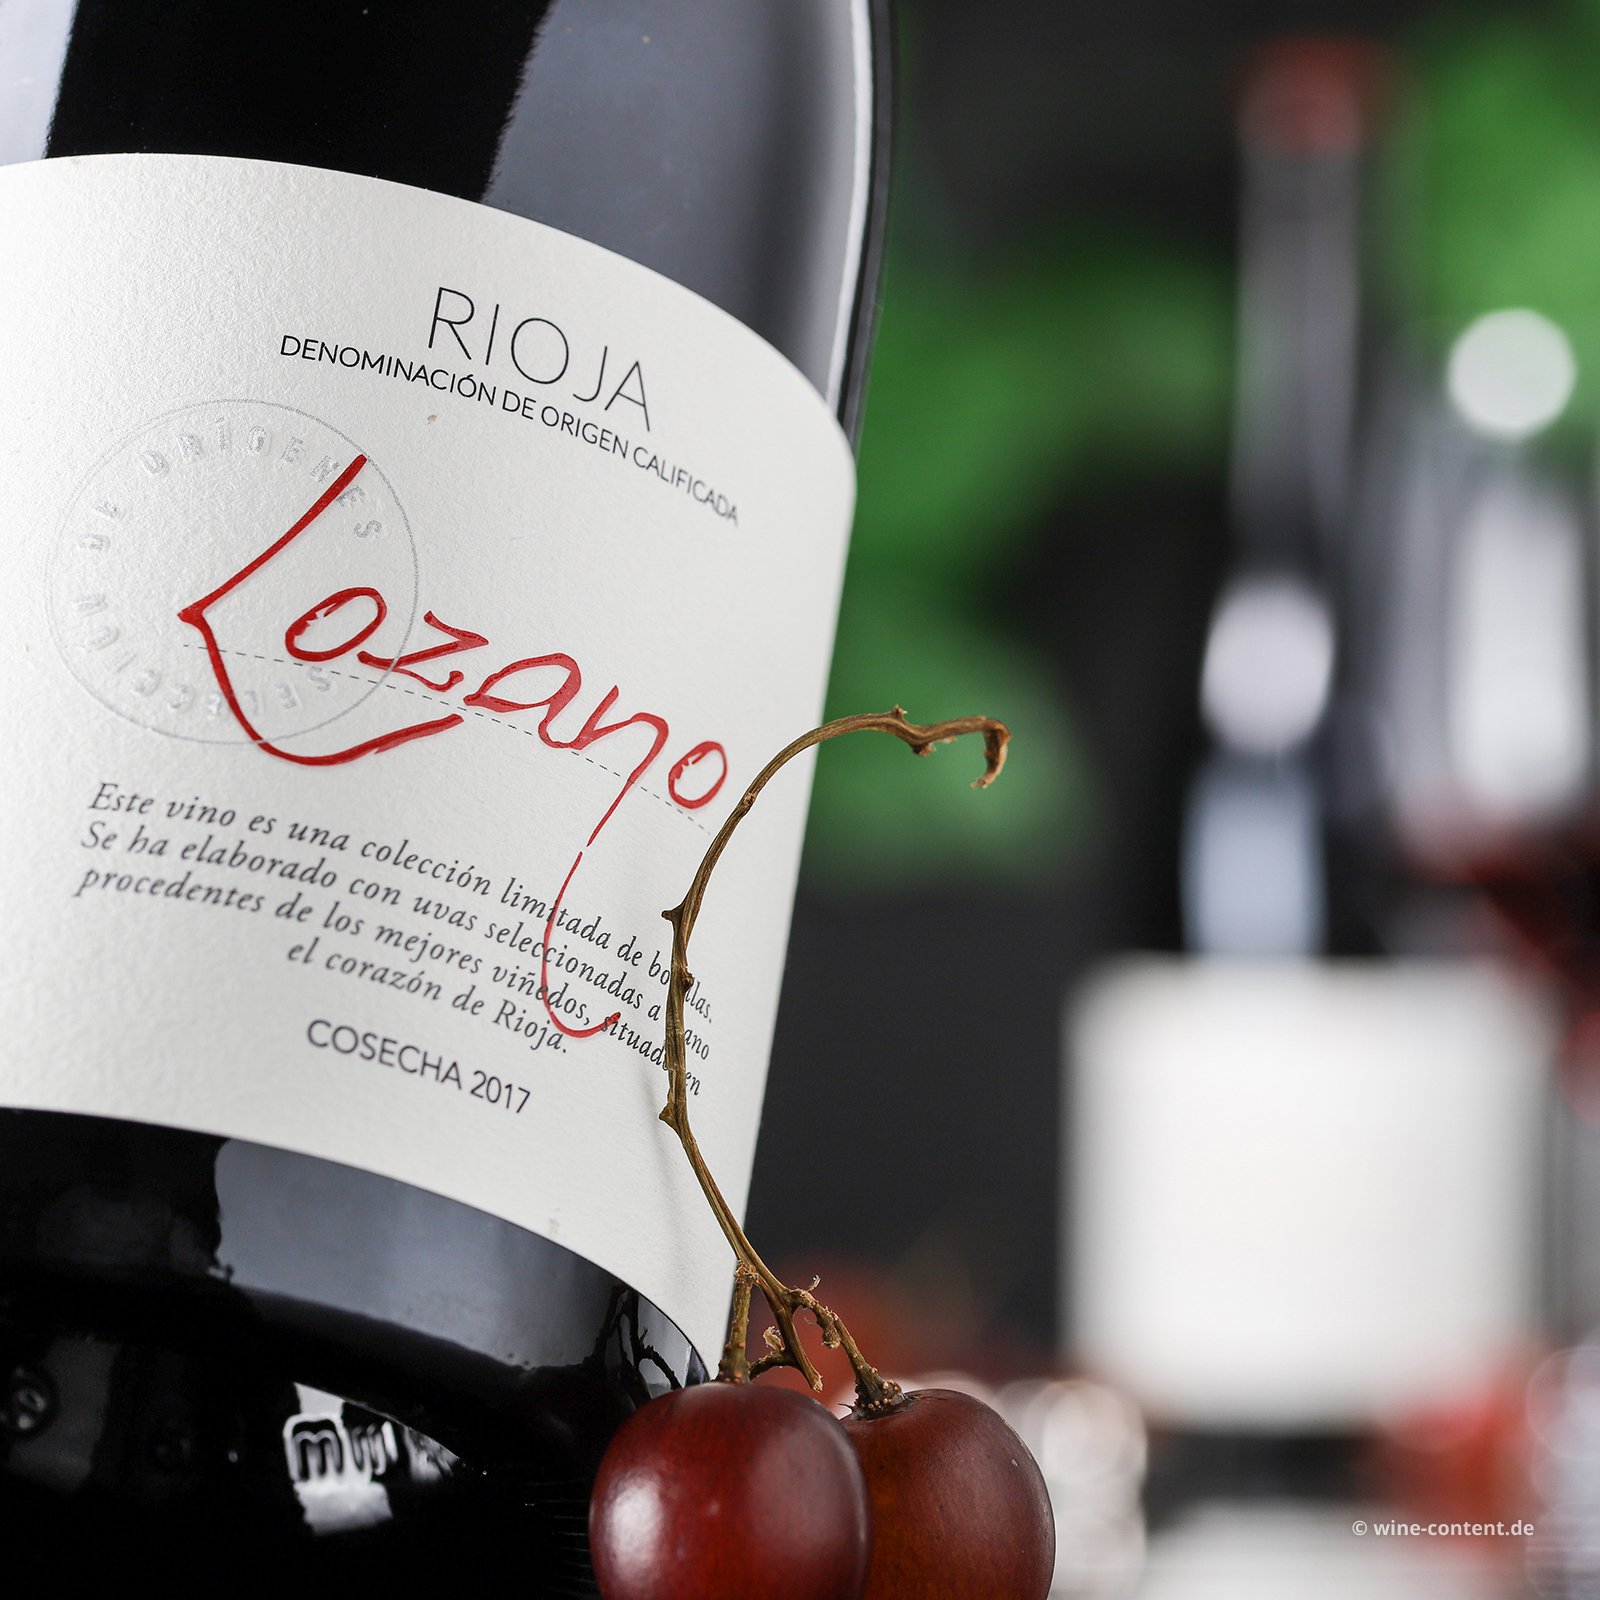 Rioja 2017 Lozano